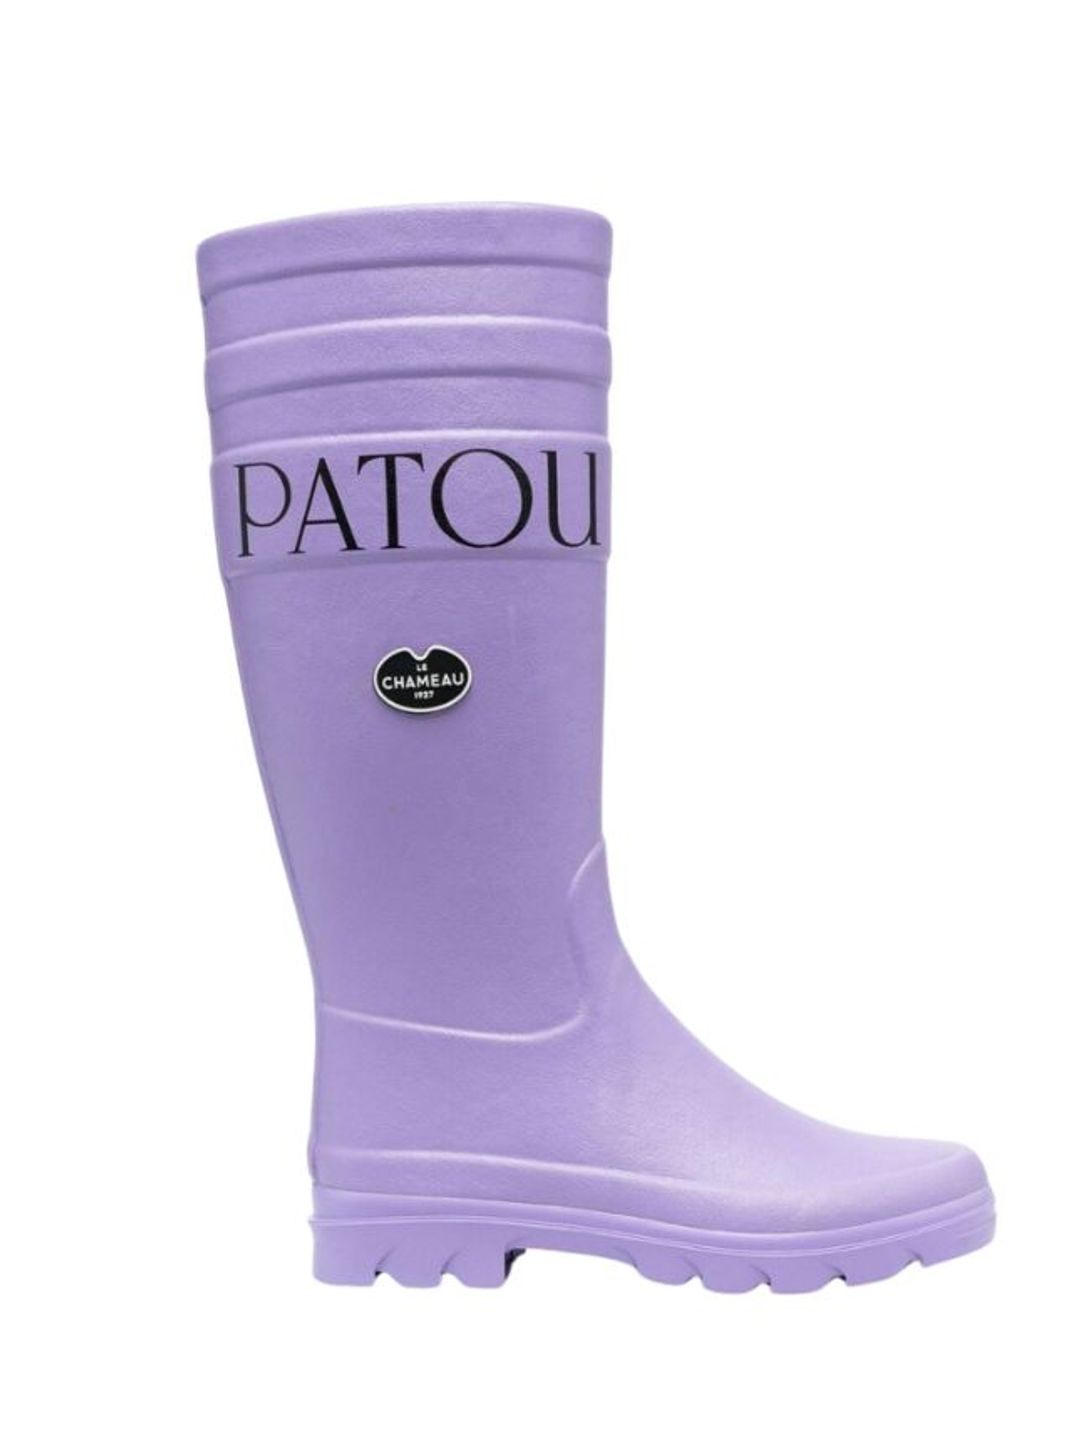 Patou lilac wellies 